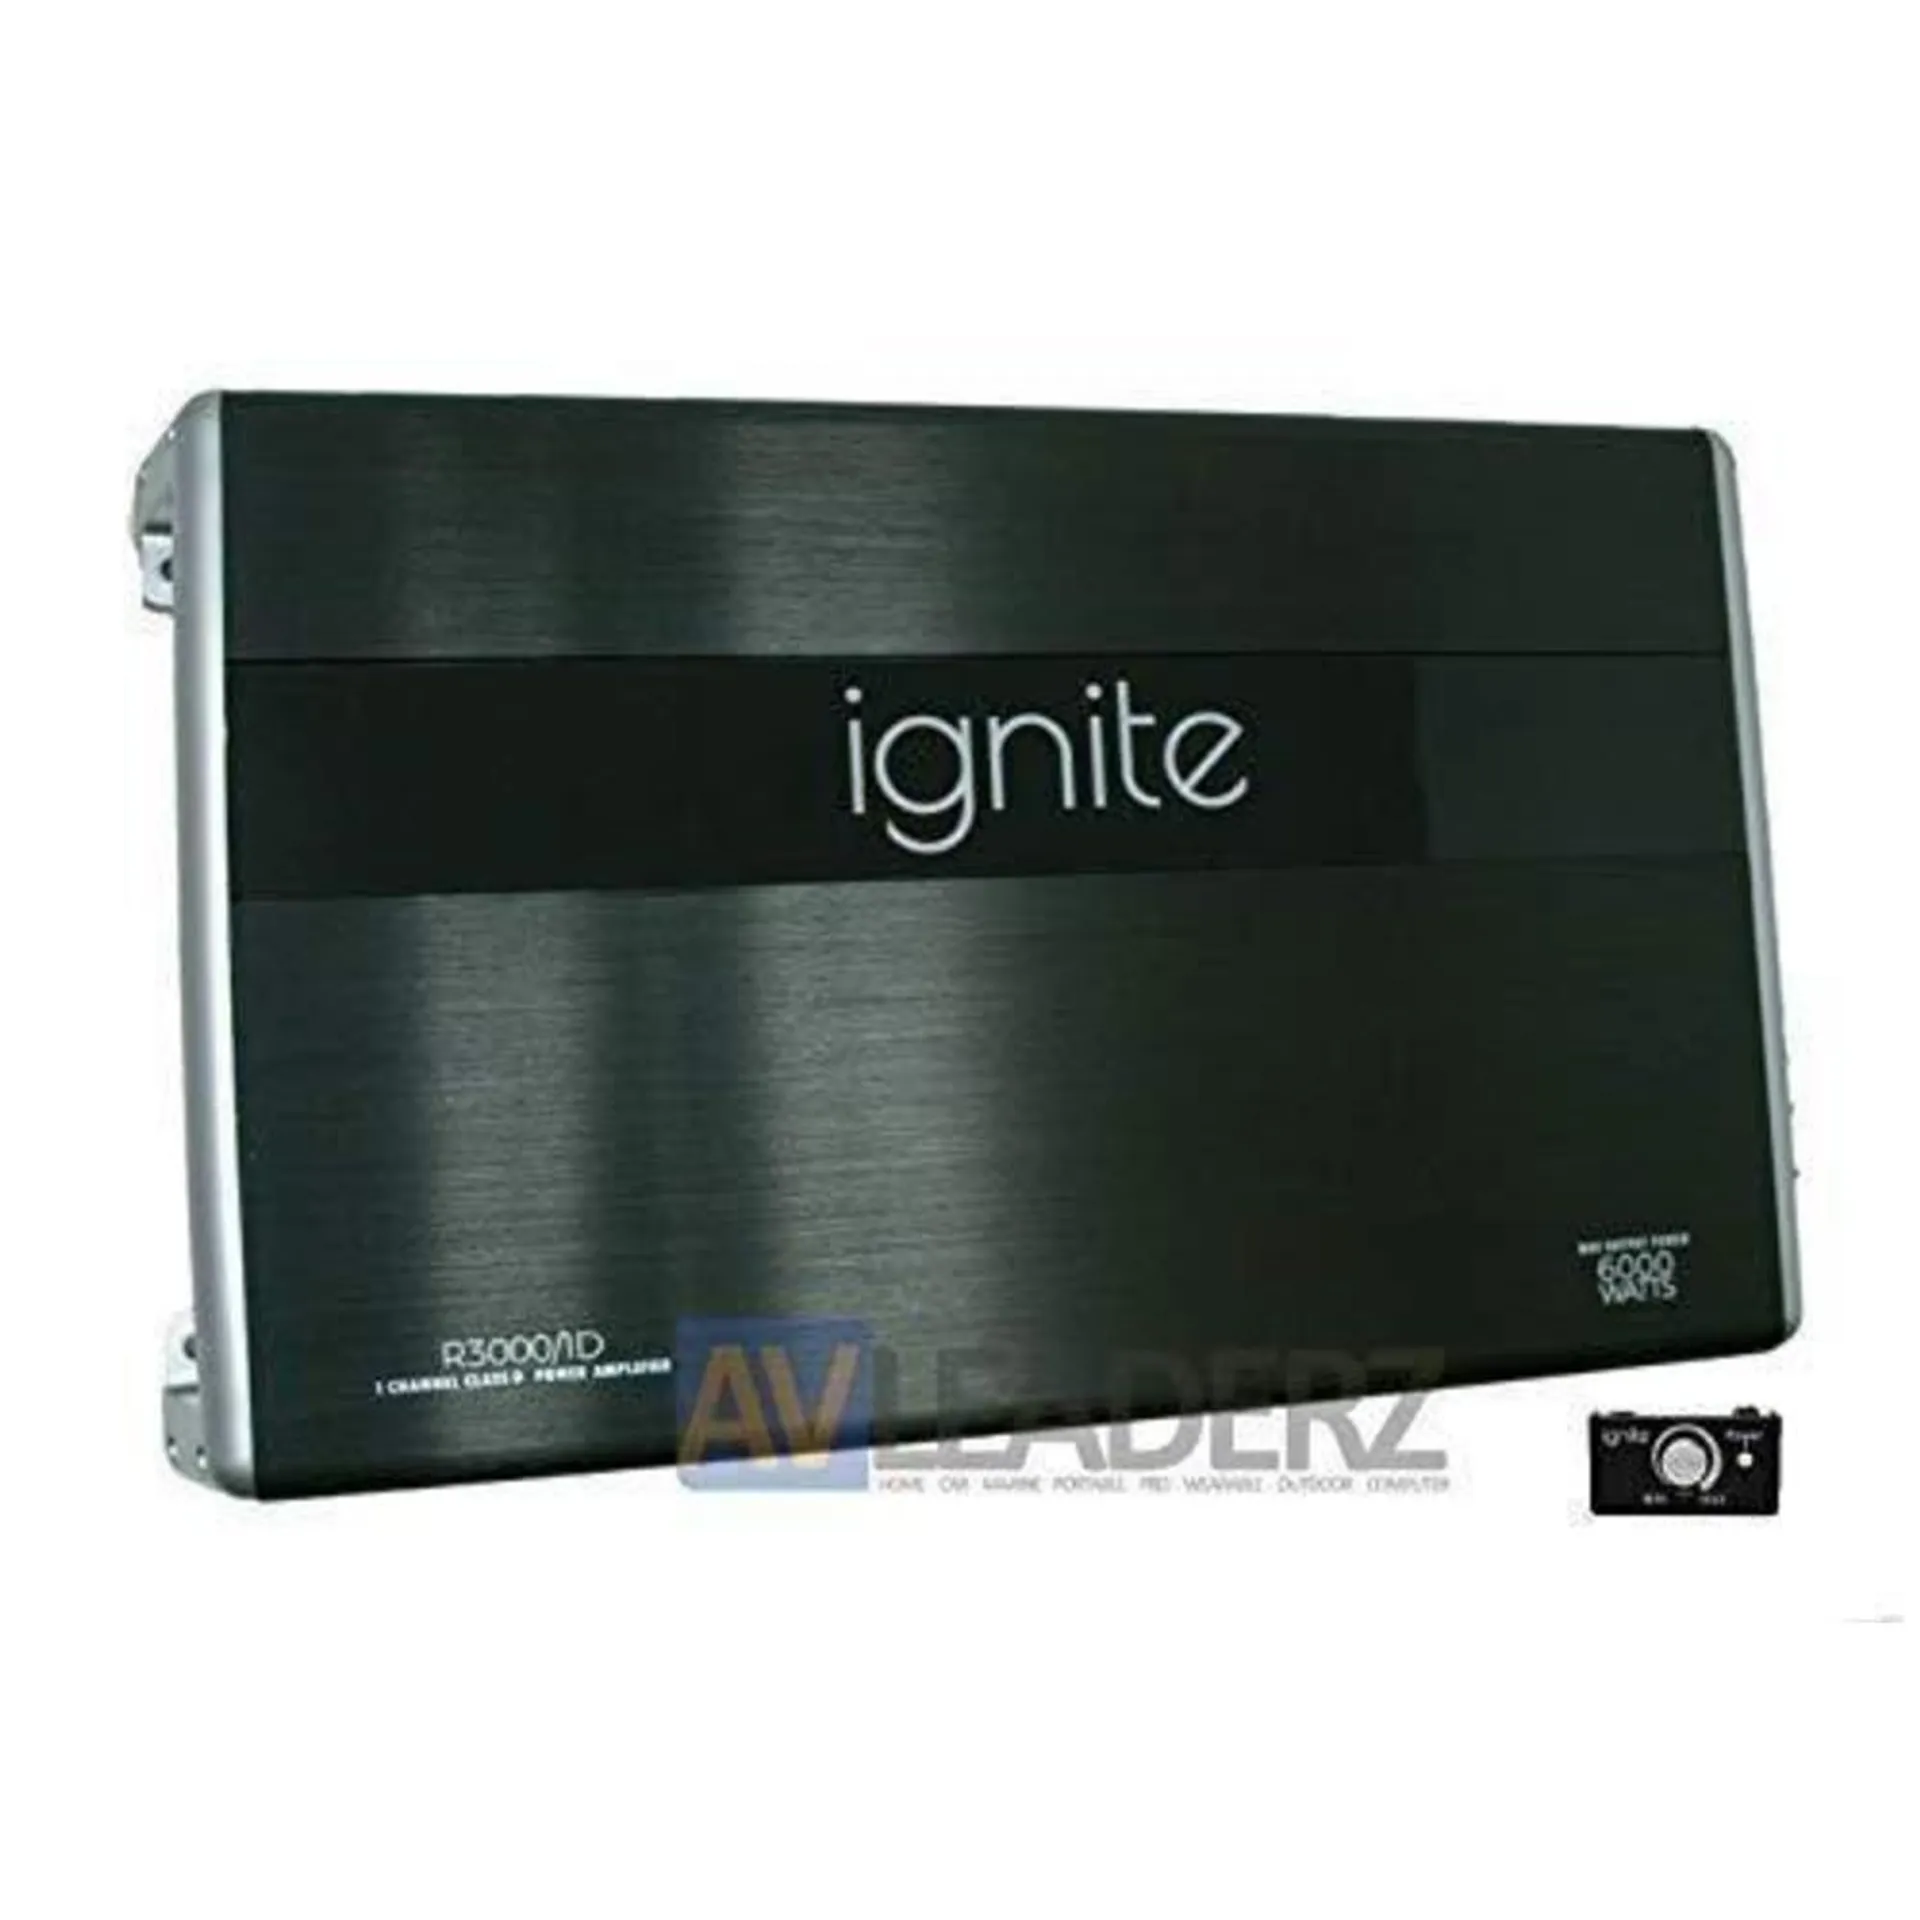 ignite audio r3000/1d, class d mono block car amplifier - 6000 watts peak power